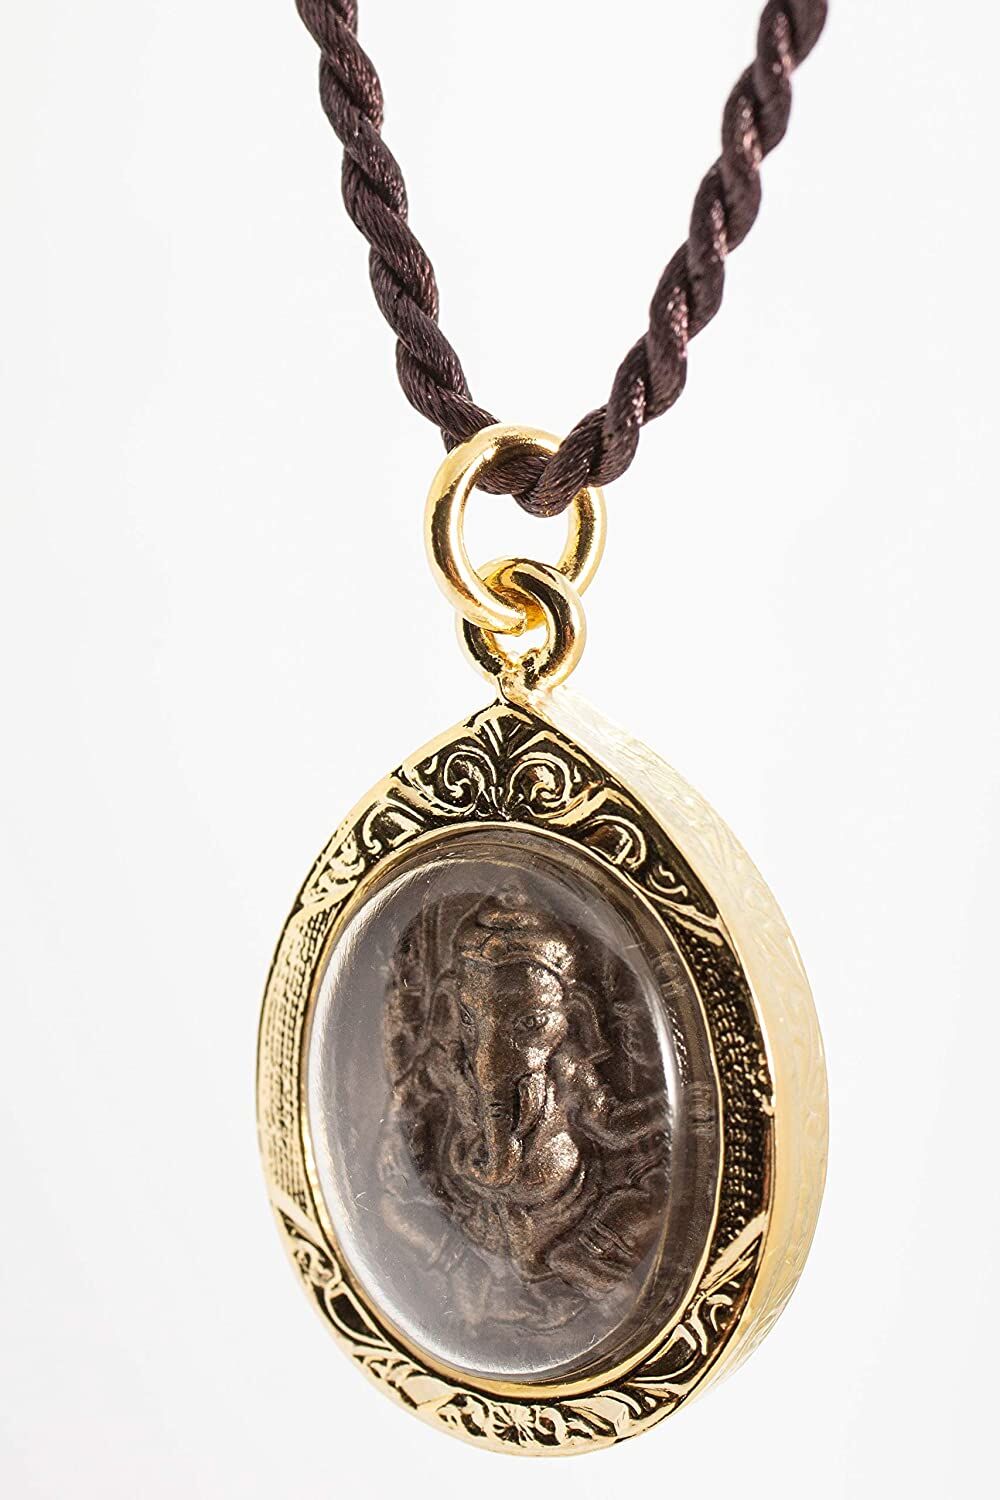 Artschatz - Ganesh with Shiva Amulet Hindu Ganesh Pendant